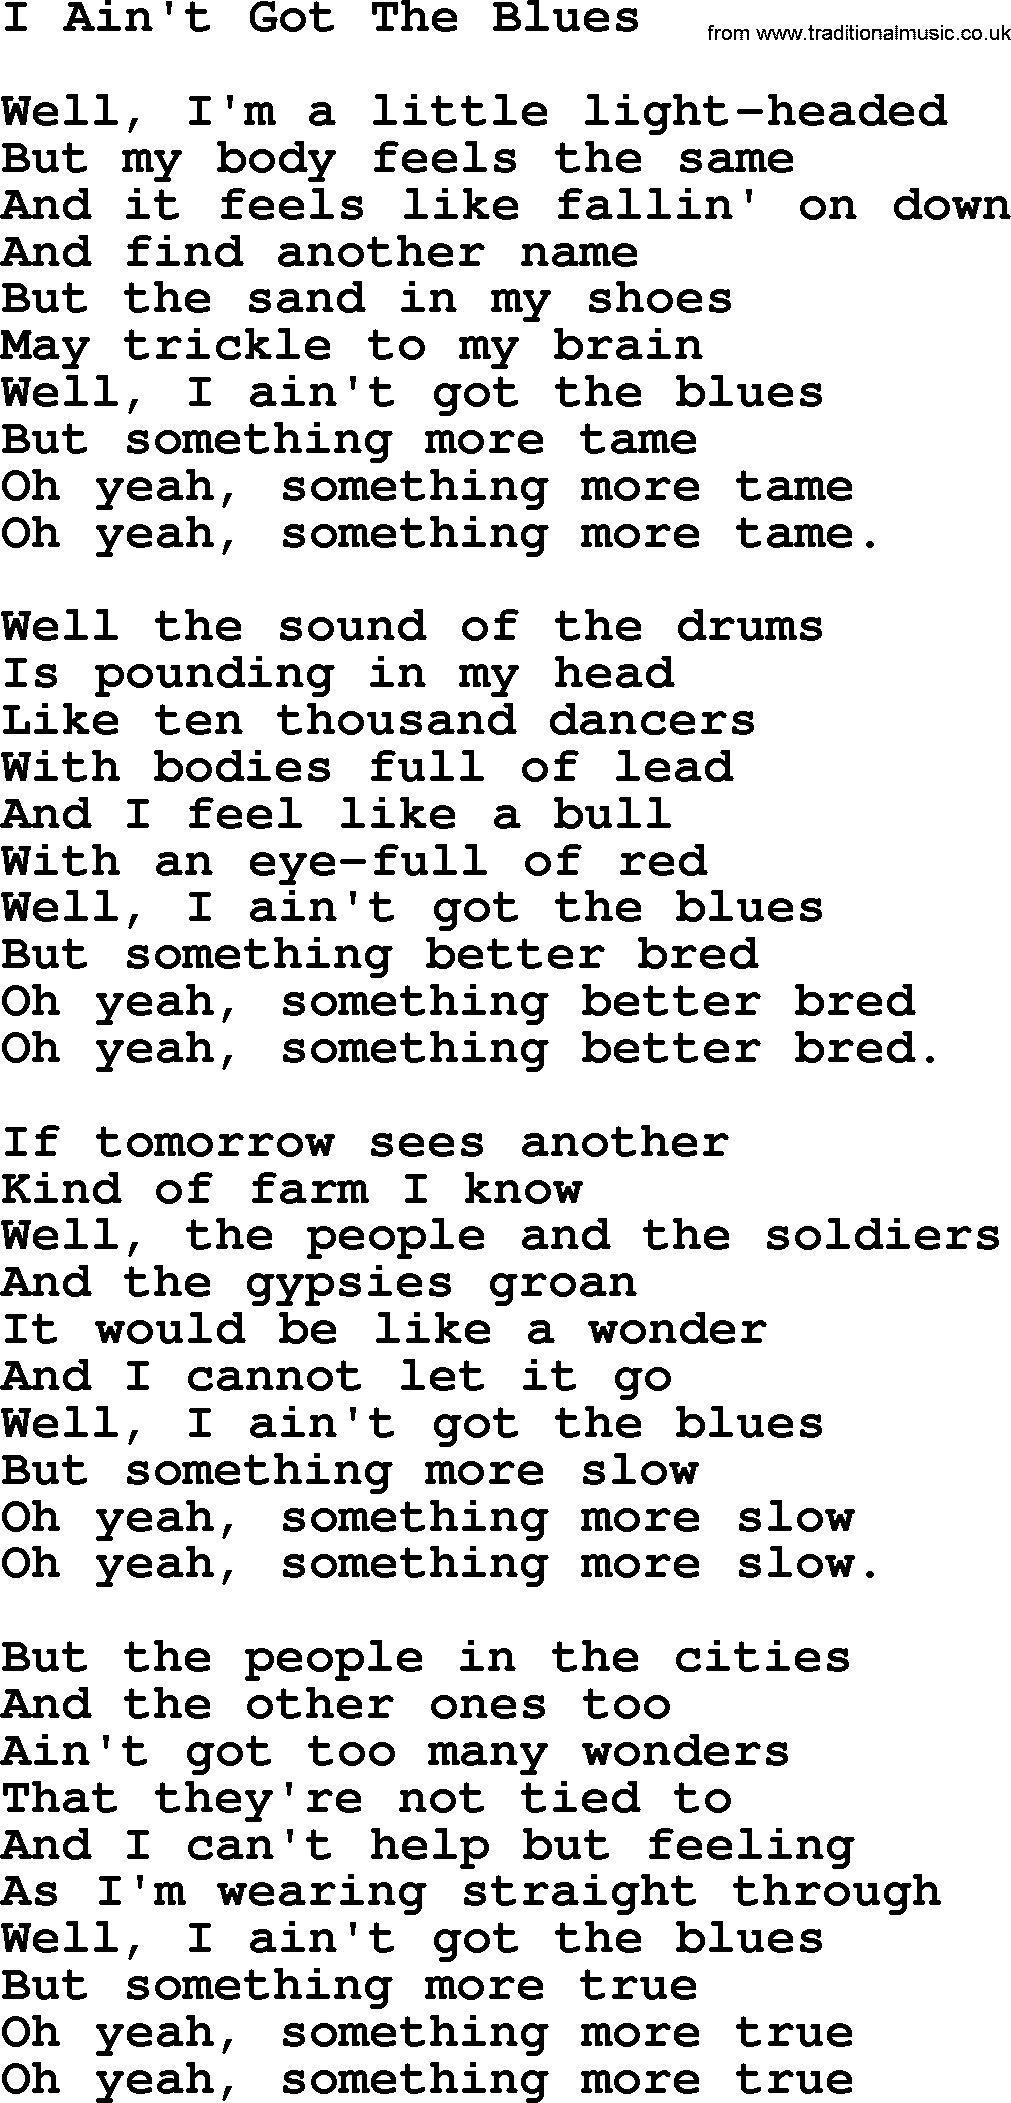 The Byrds song I Ain't Got The Blues, lyrics